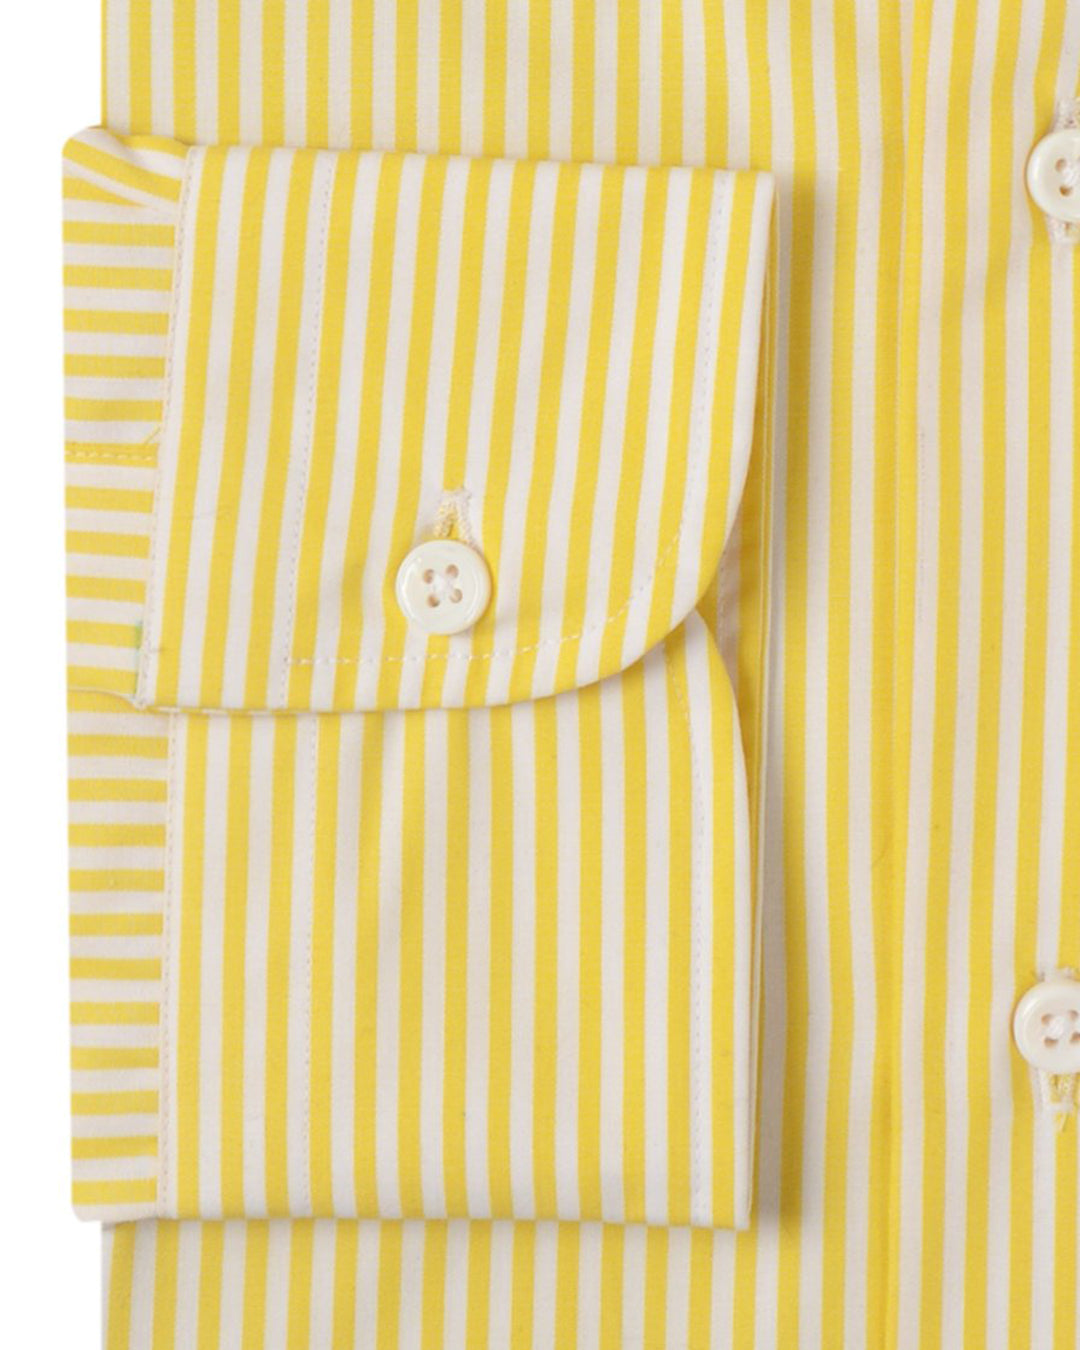 Cyber Pencil Yellow Stripes on White